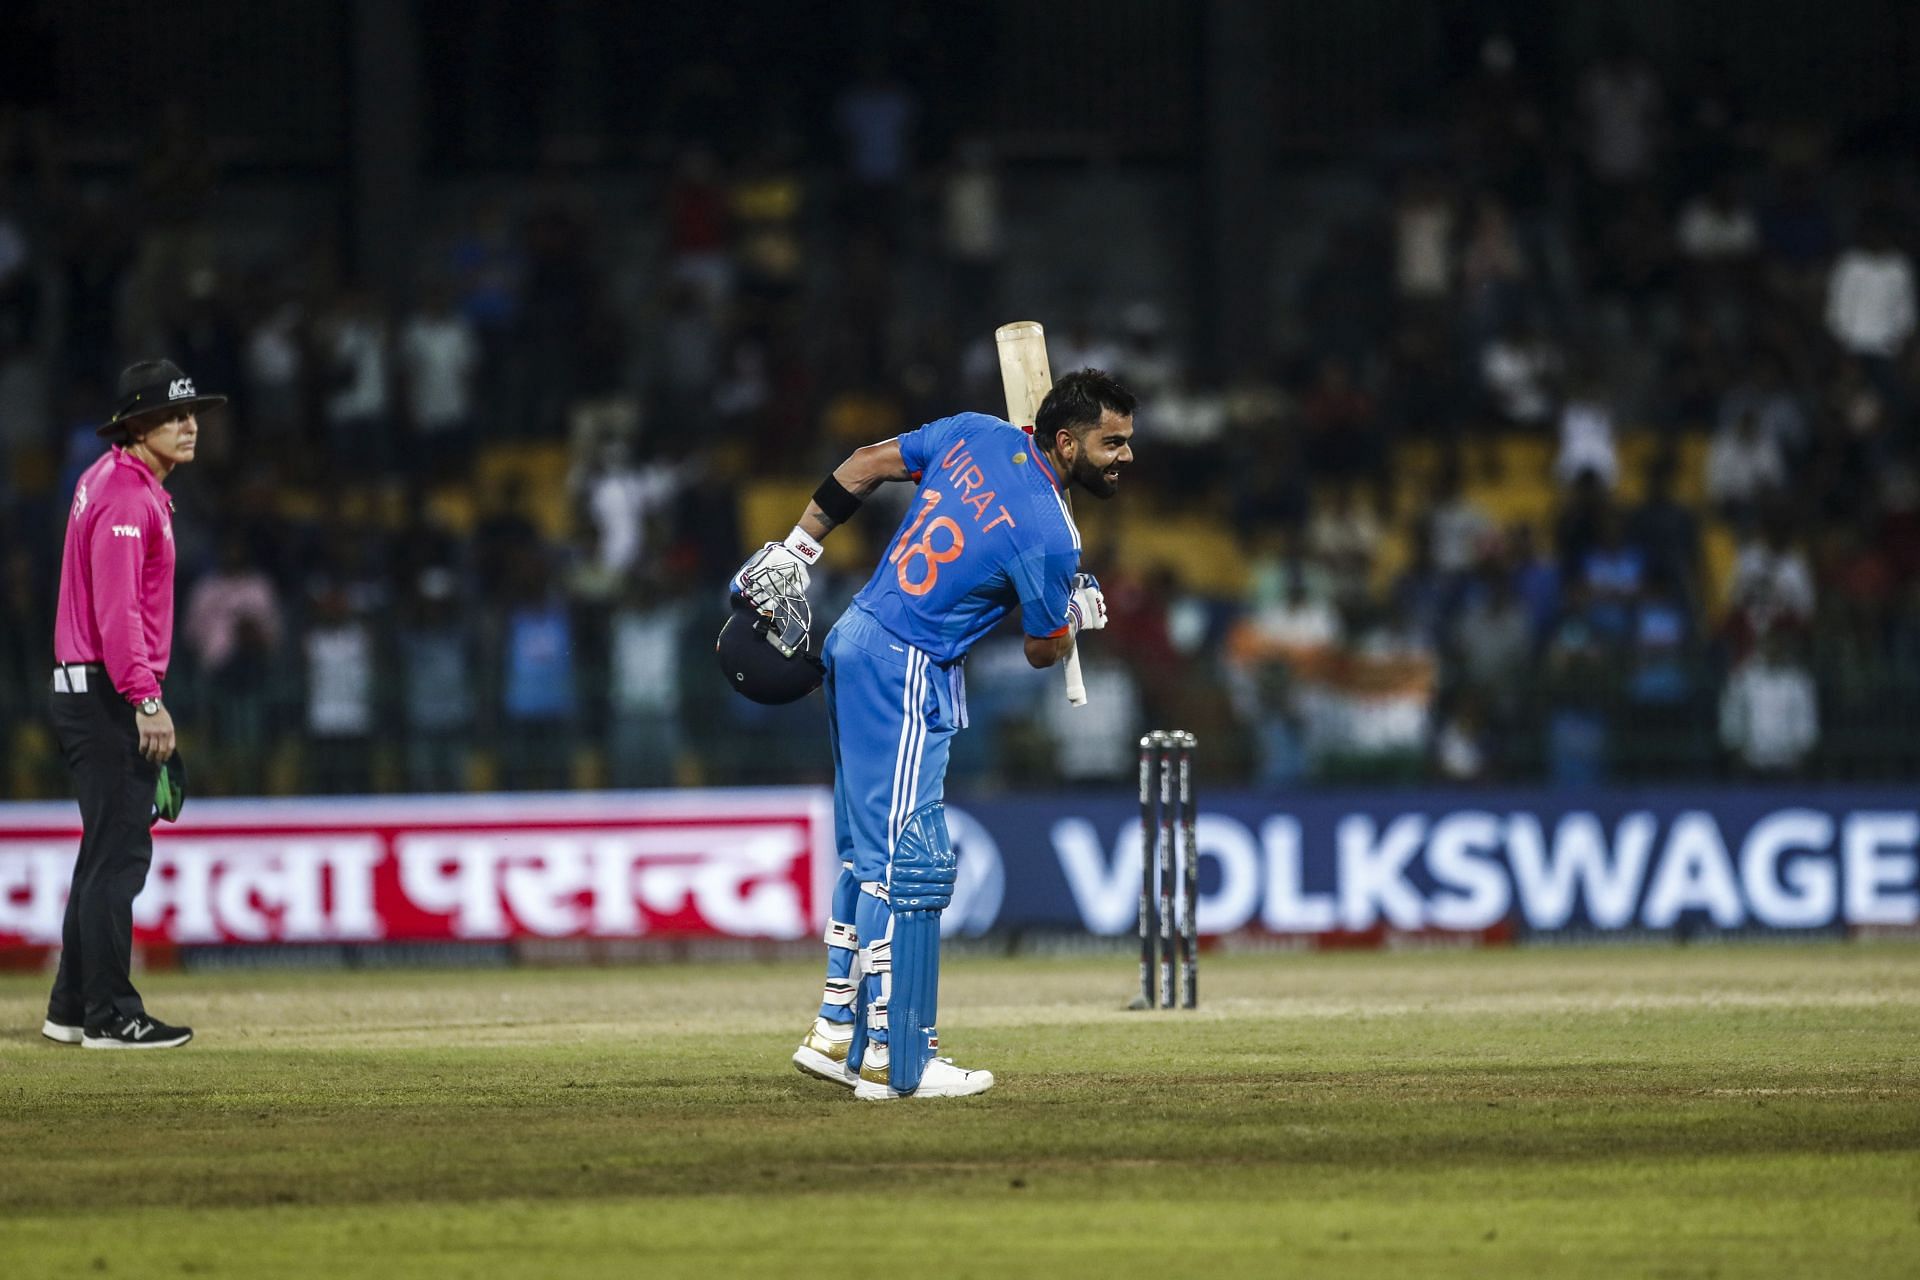 Virat Kohli completed his 13,000 ODI runs during his innings vs Pakistan [Getty Images]